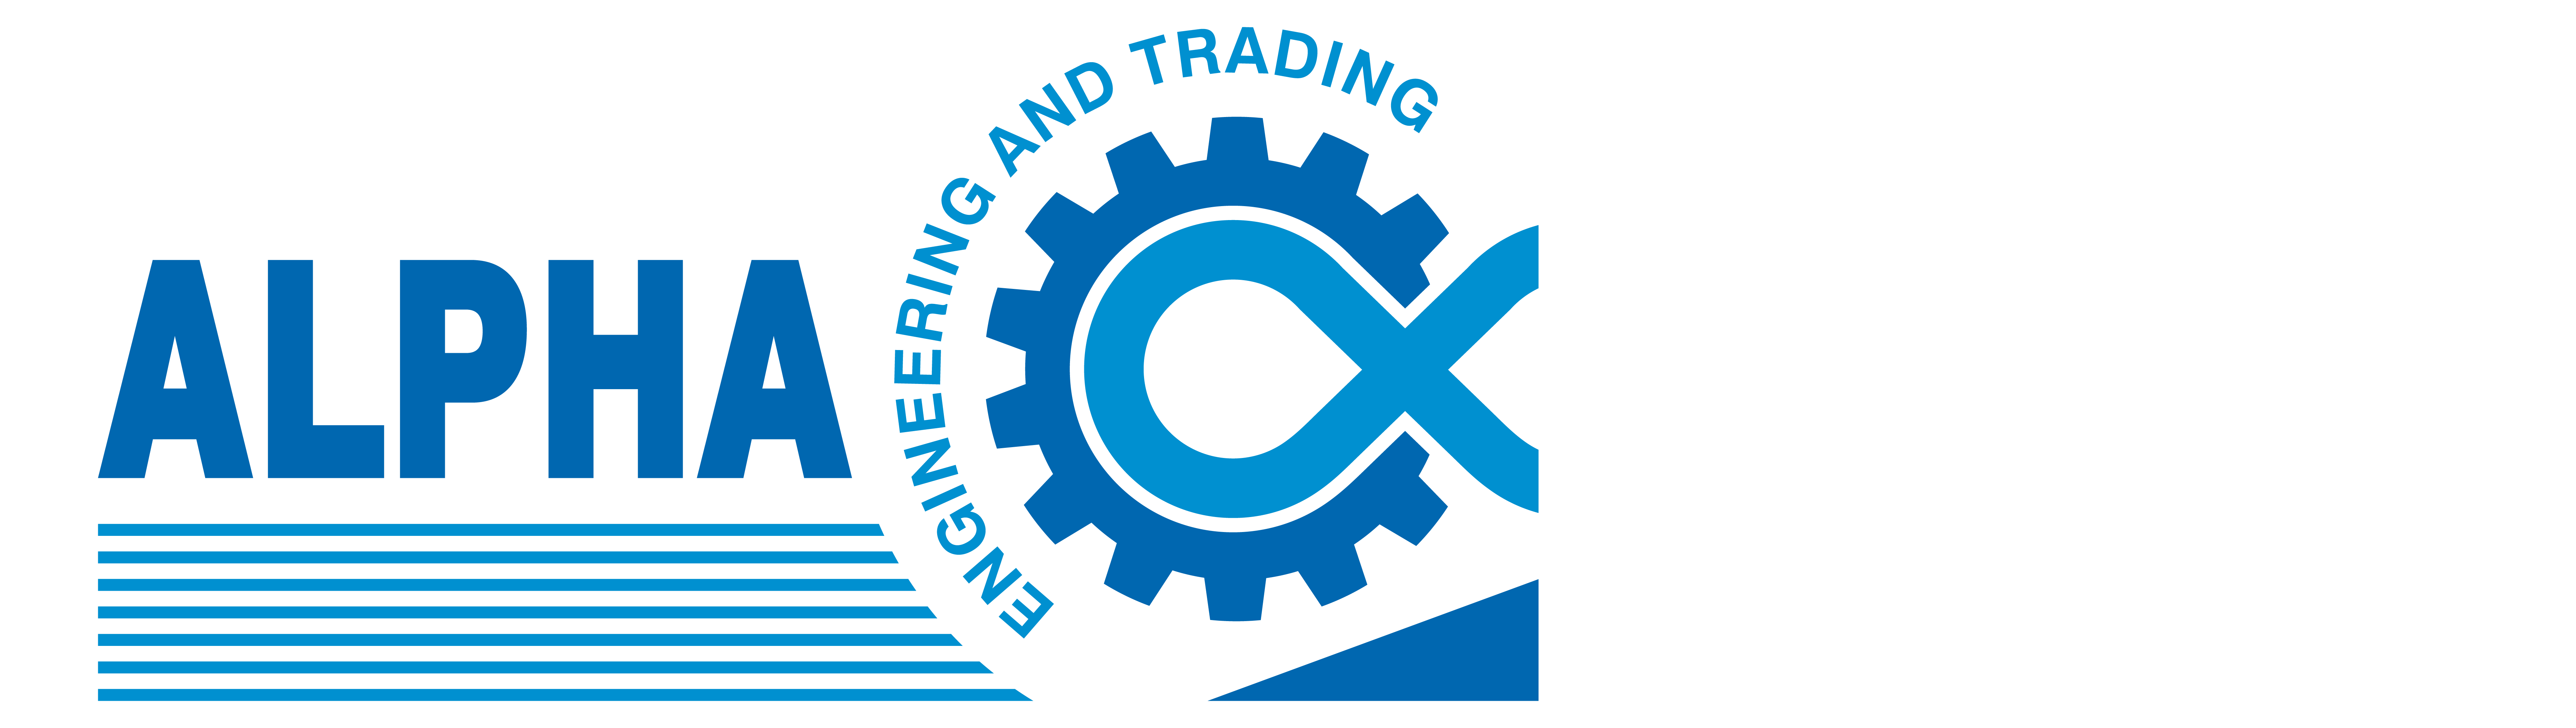 Alpha Engineering & Trading Logo